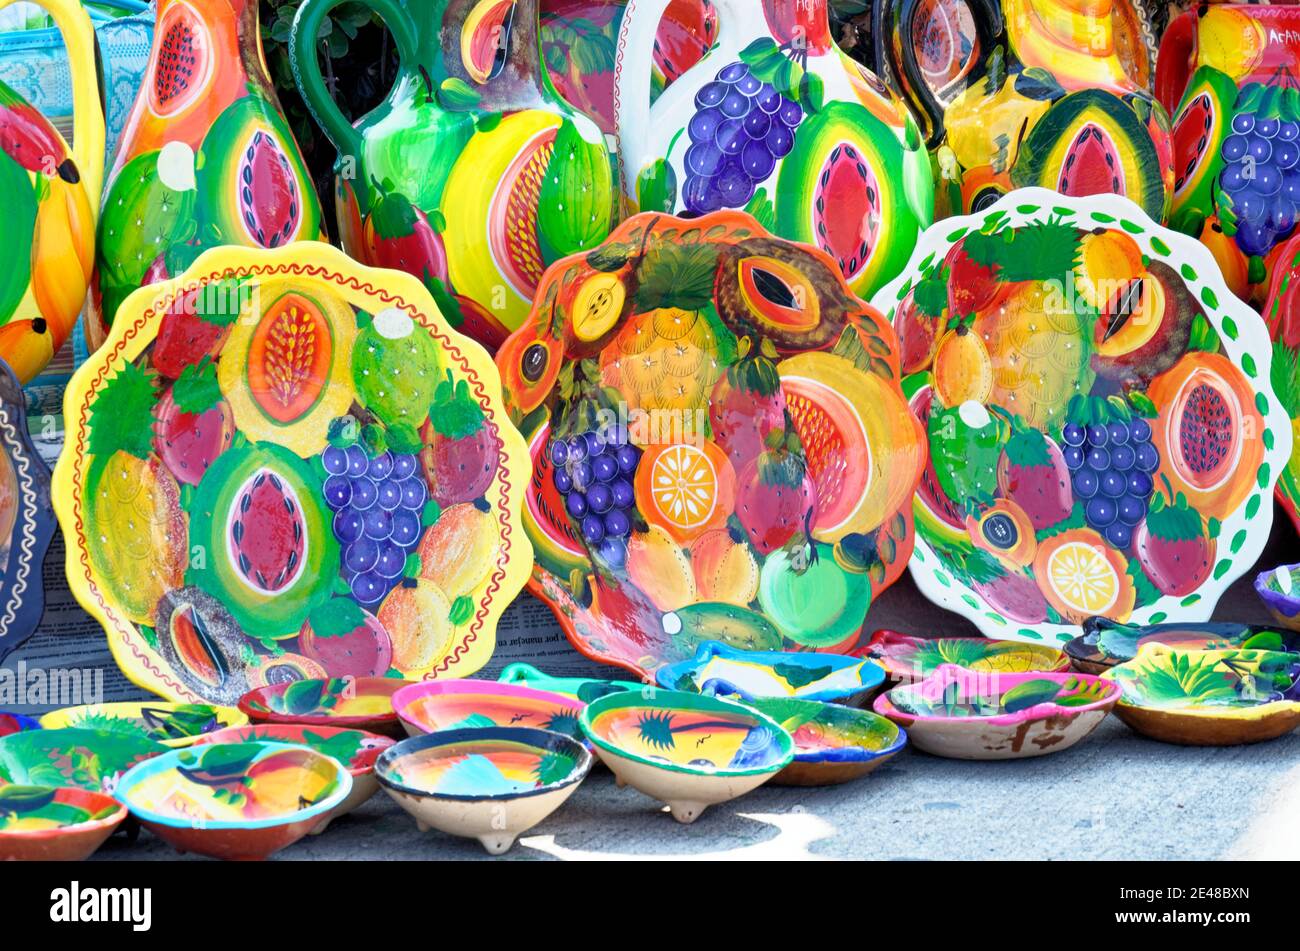 Keramik Keramik, Geschirr, Steingut, Geschirr, handwerklich - Acapulco  Flohmarkt Guererro Staat, Mexiko Stockfotografie - Alamy